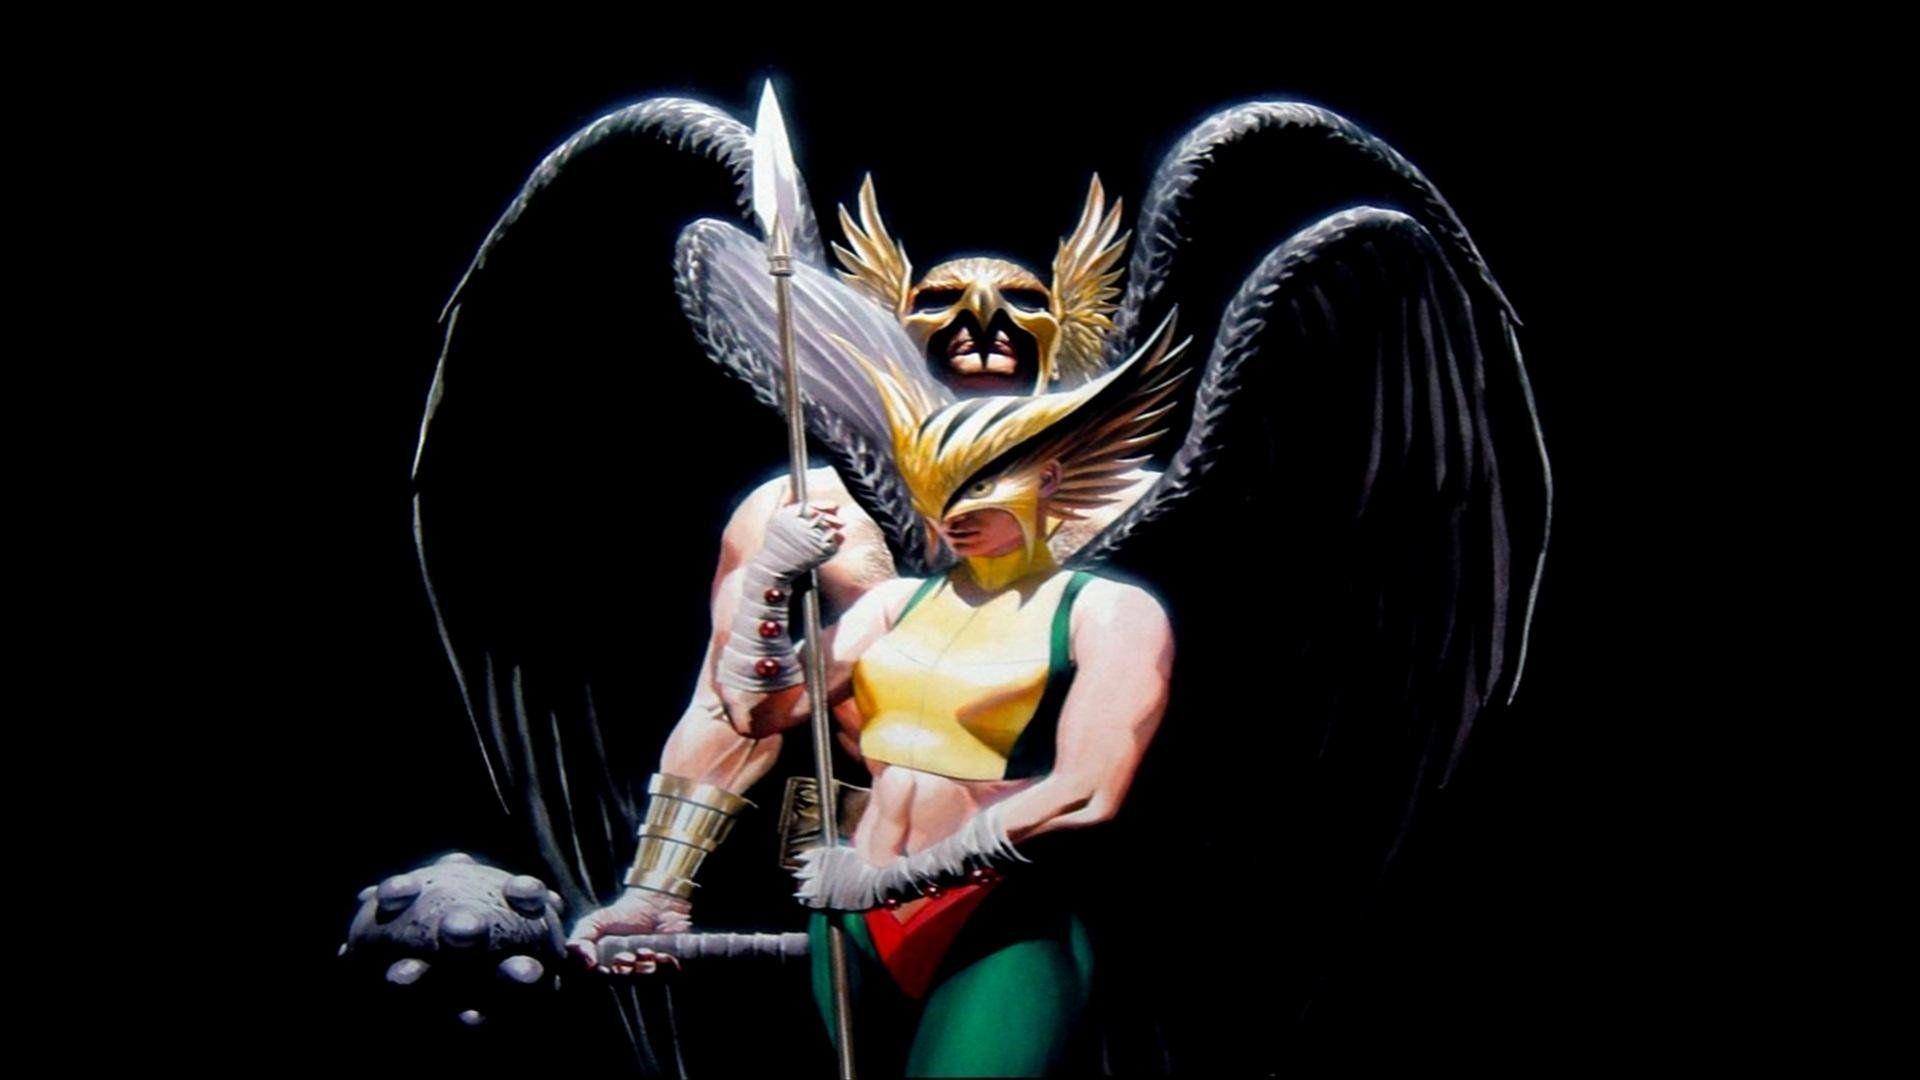 Hawkgirl Wallpaper